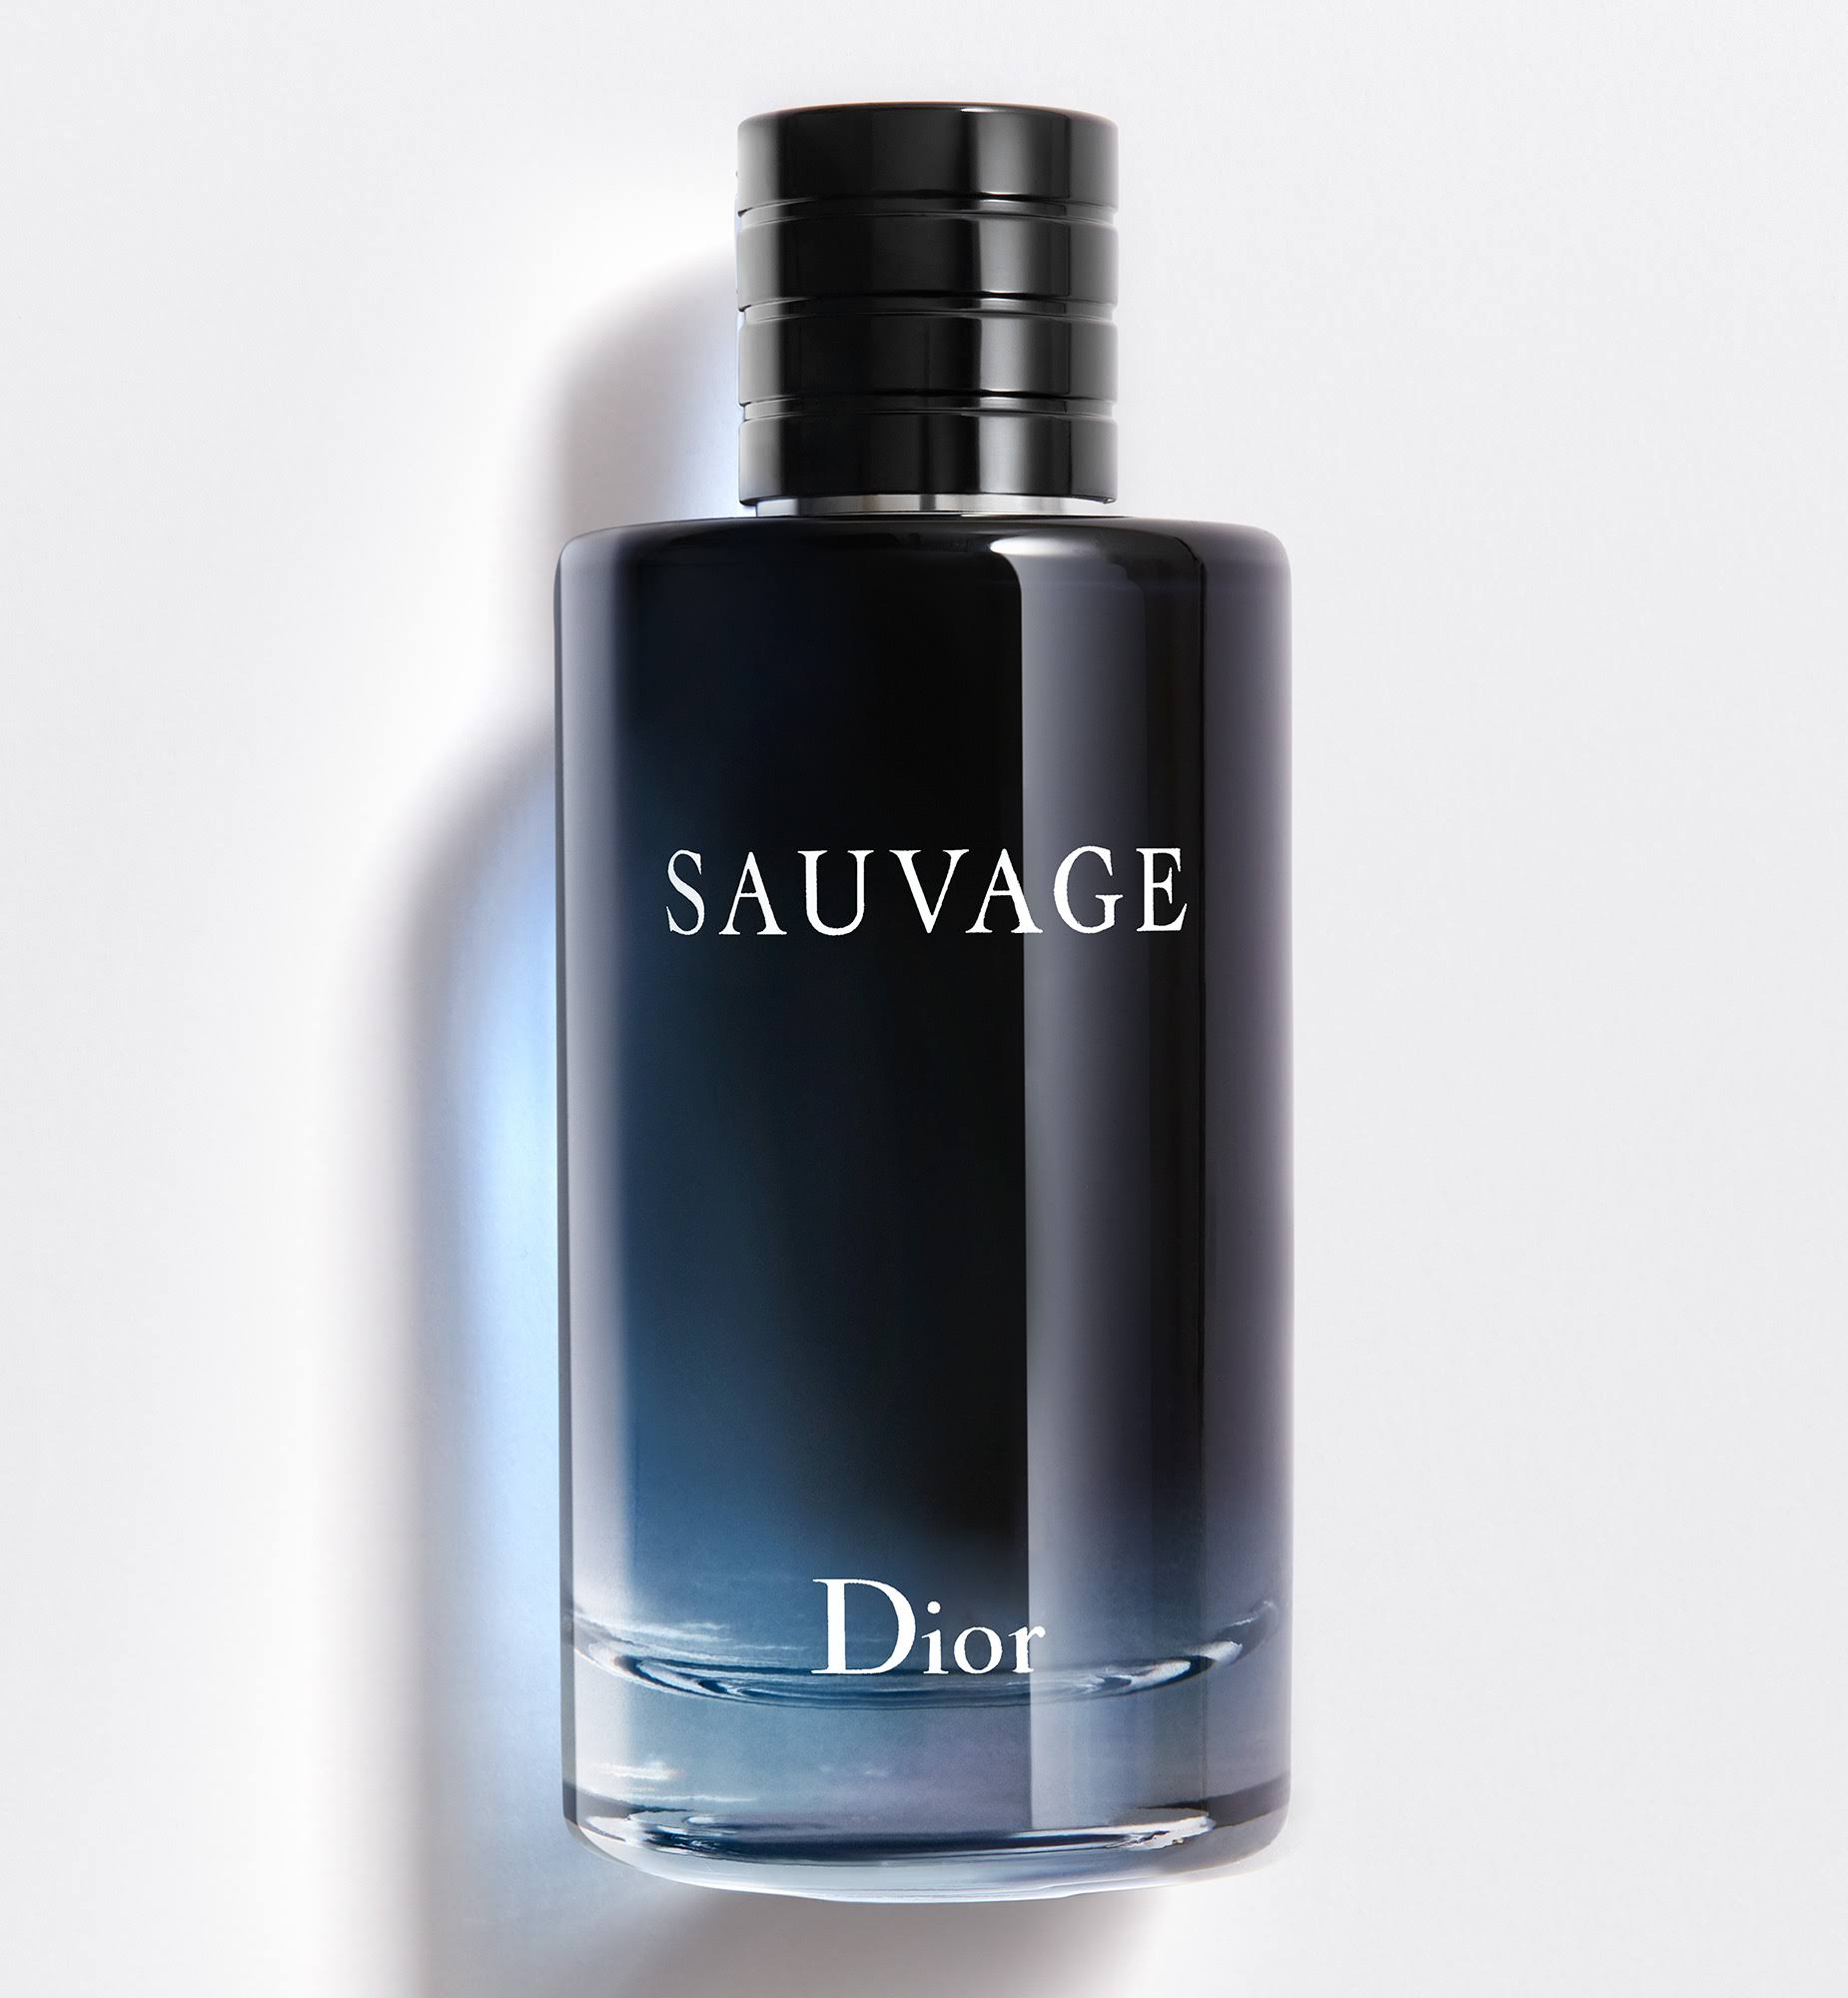 Dior Sauvage 200ml Eau de Toilette Spray